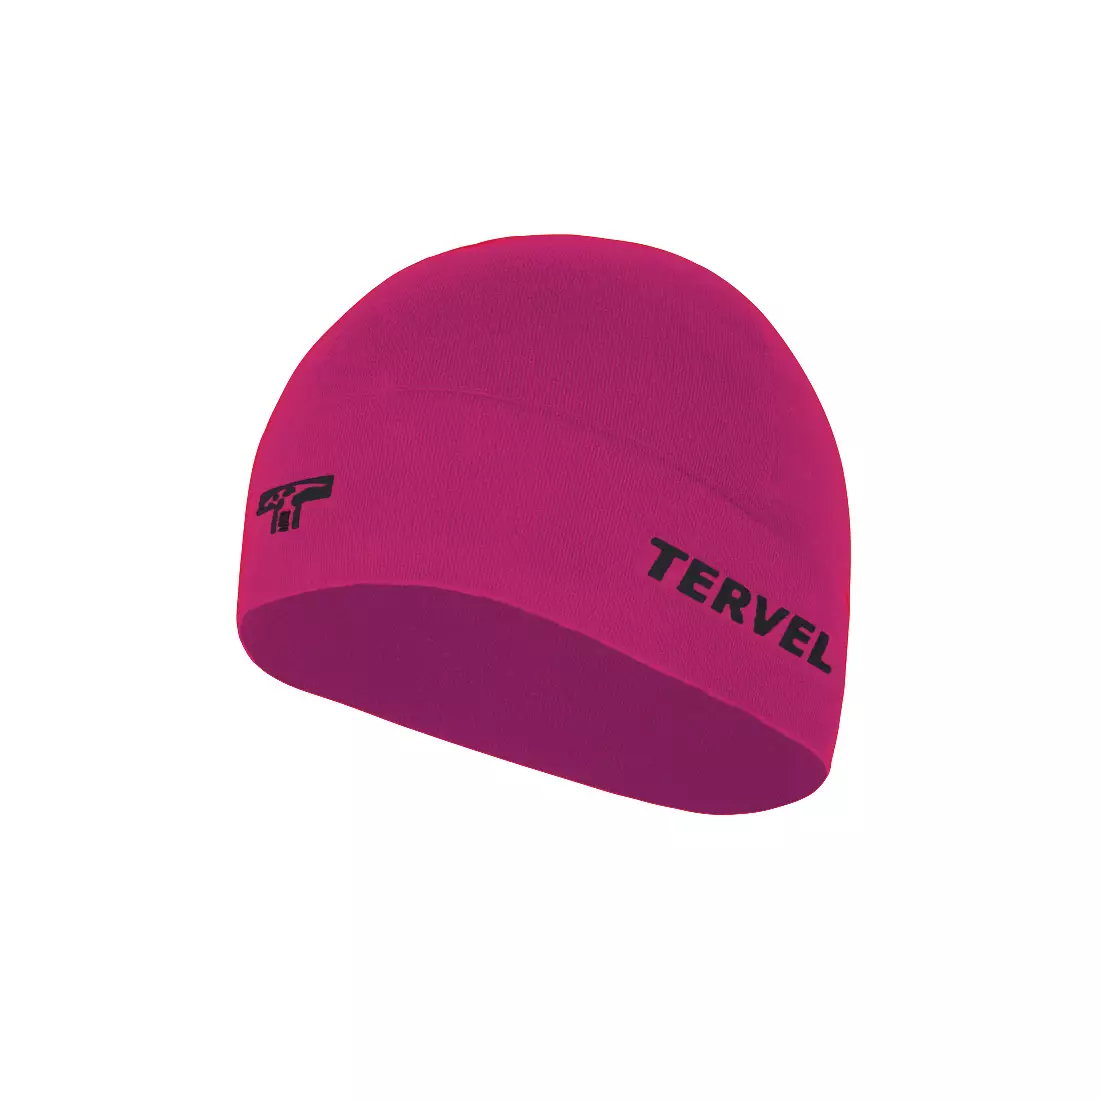 TERVEL 7001 - COMFORTLINE - training cap, color: Pink, size: Universal